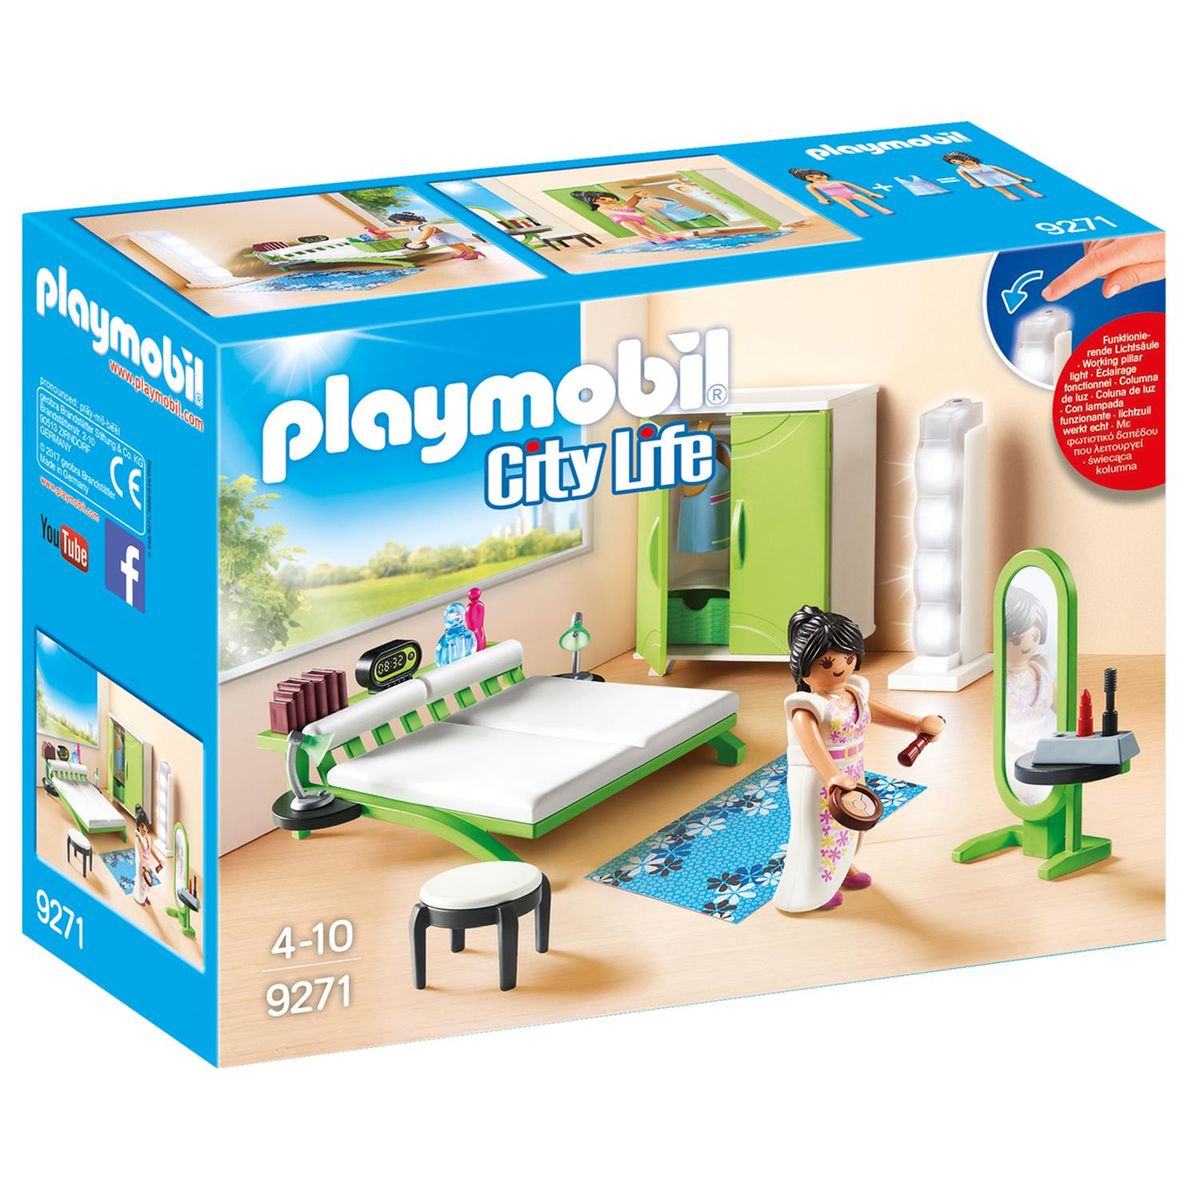 Playmobil chambre d'adolescent - de 4 à 10 ans